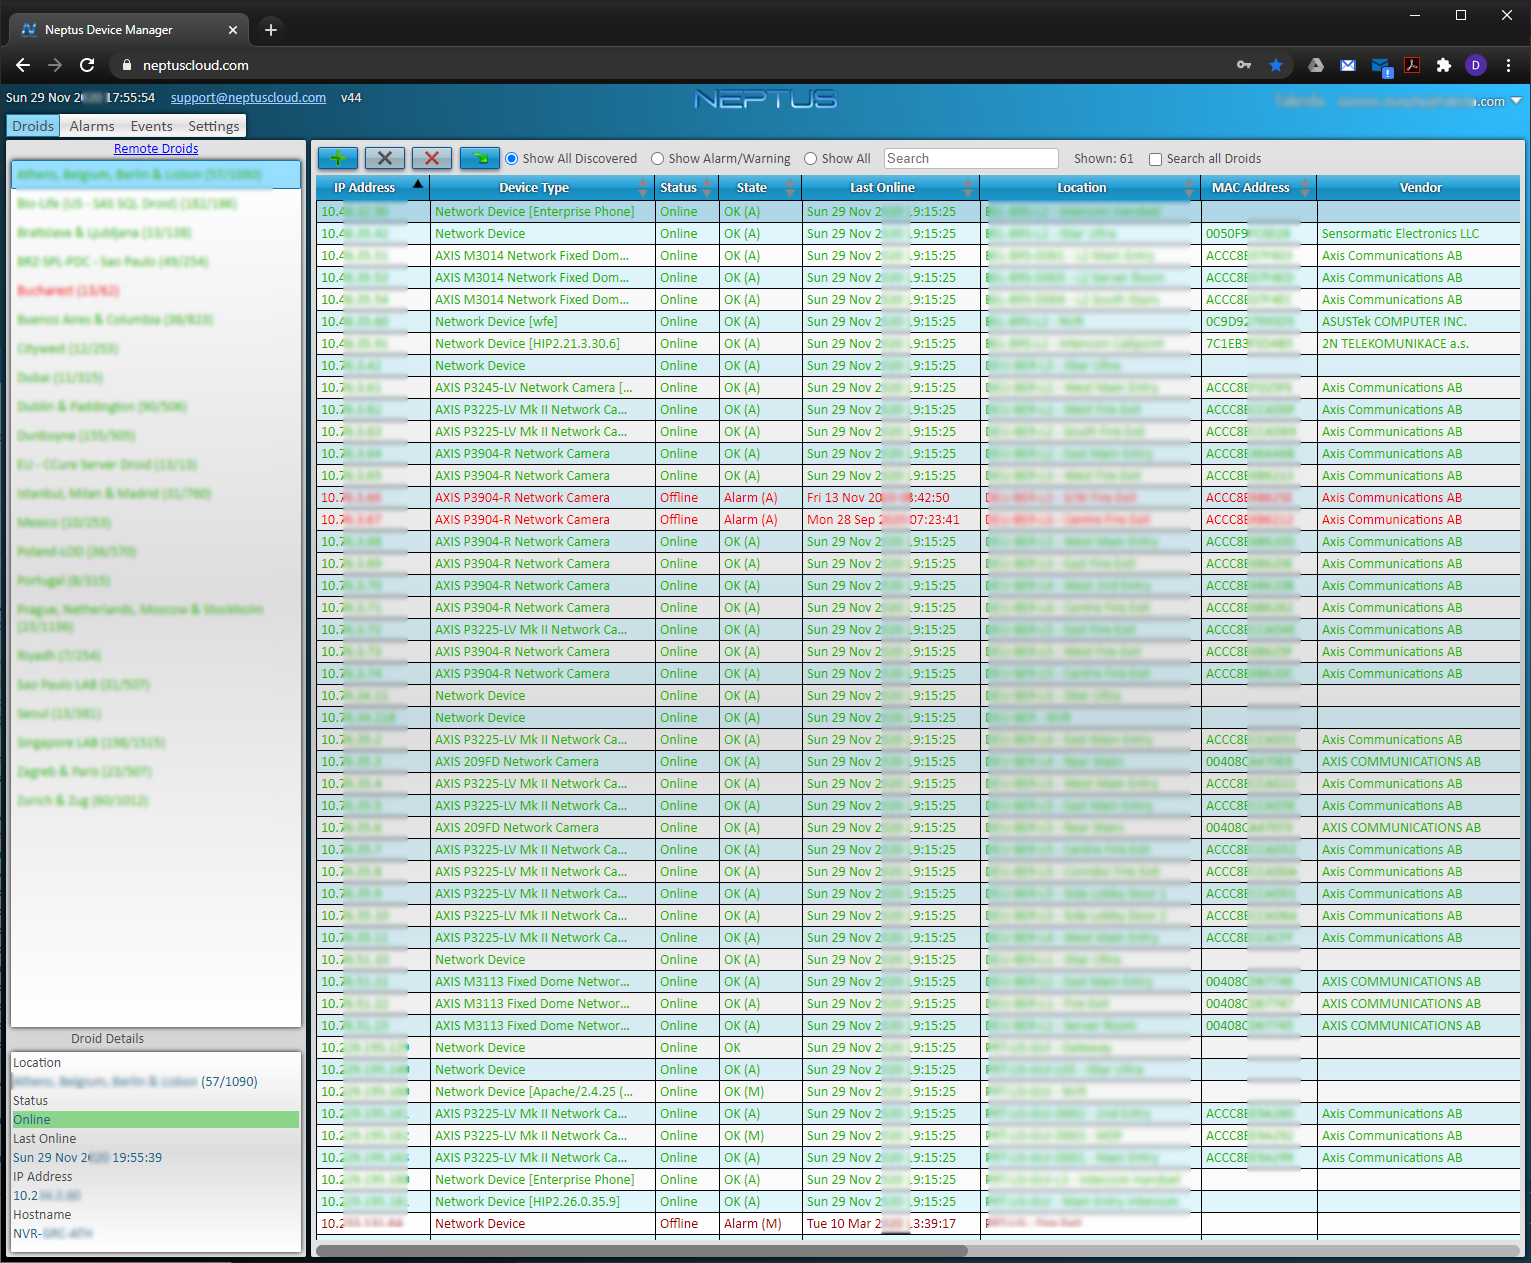 Neptus Web UI Screenshot